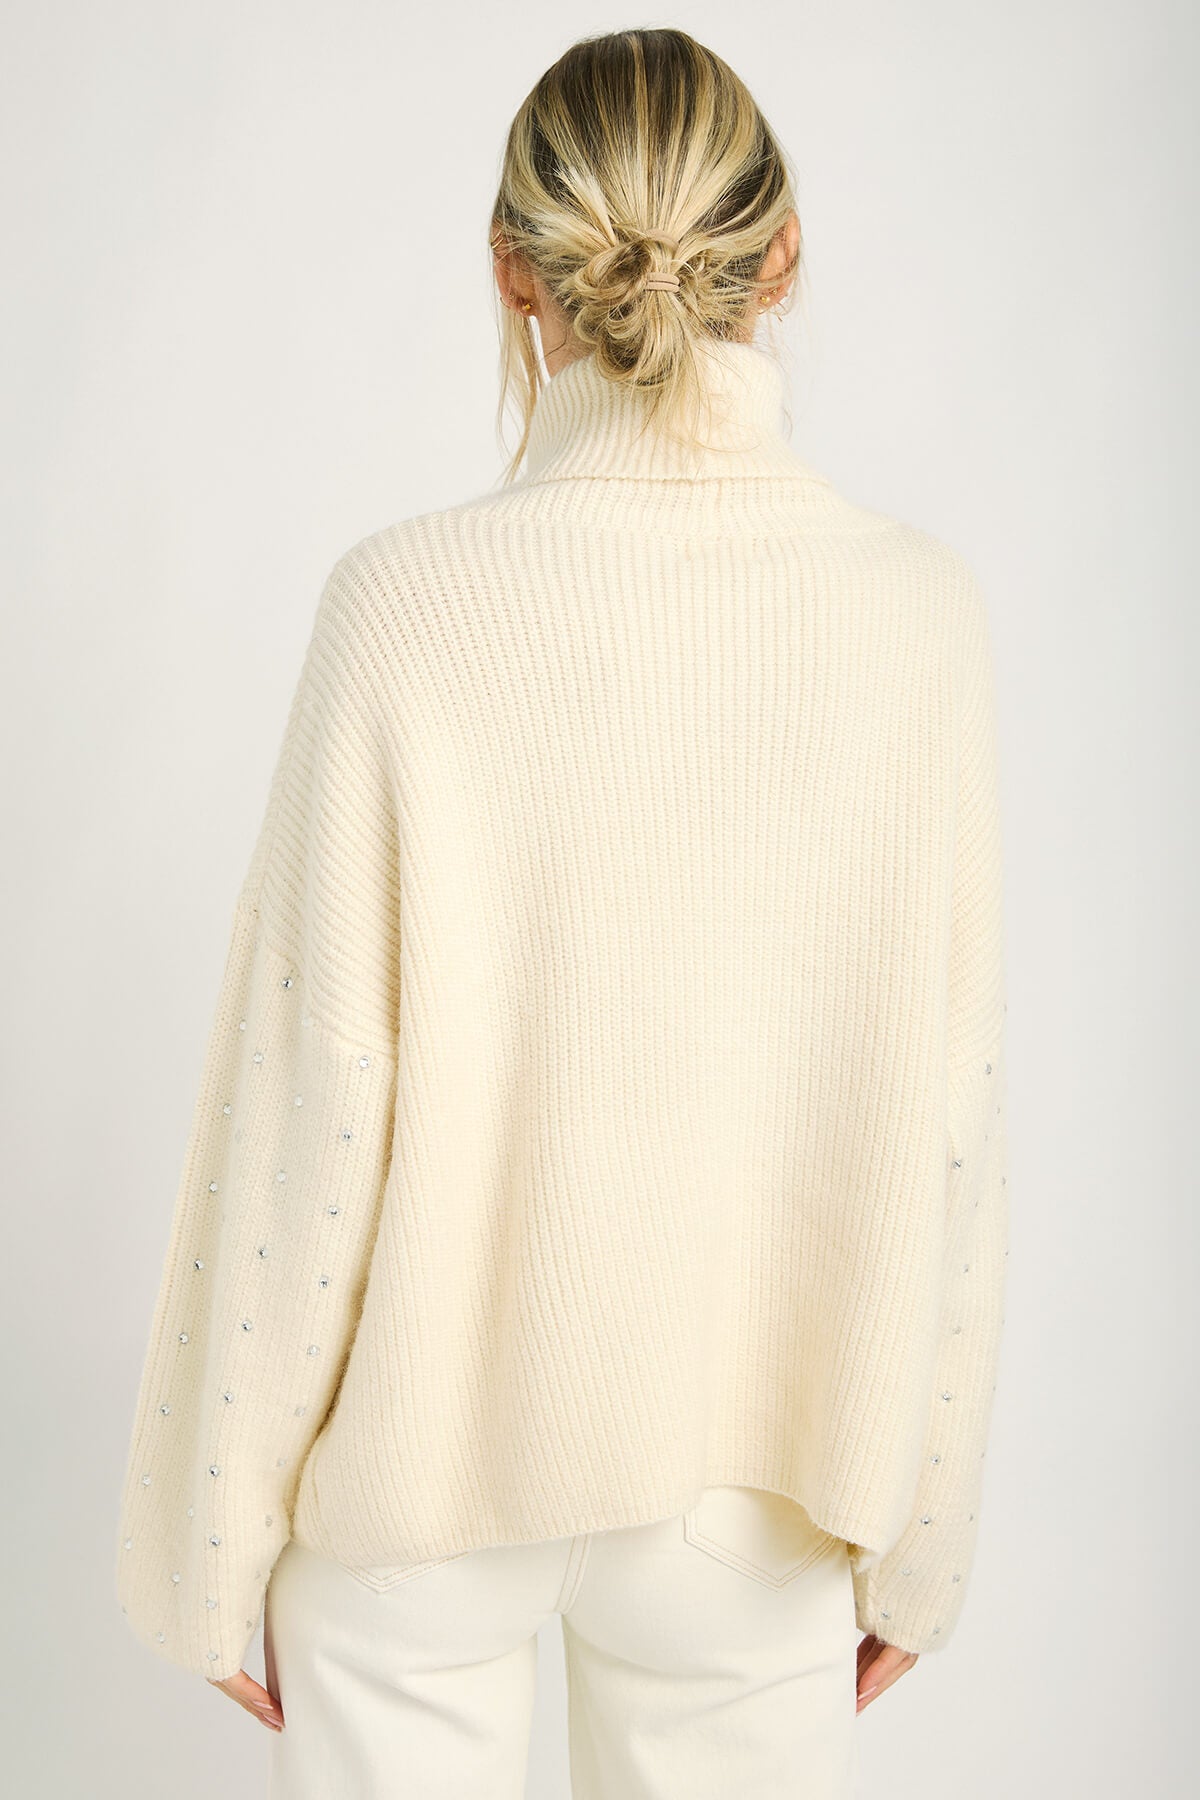 Fate Pearl Rhinestone Embellished Turtleneck Sweater